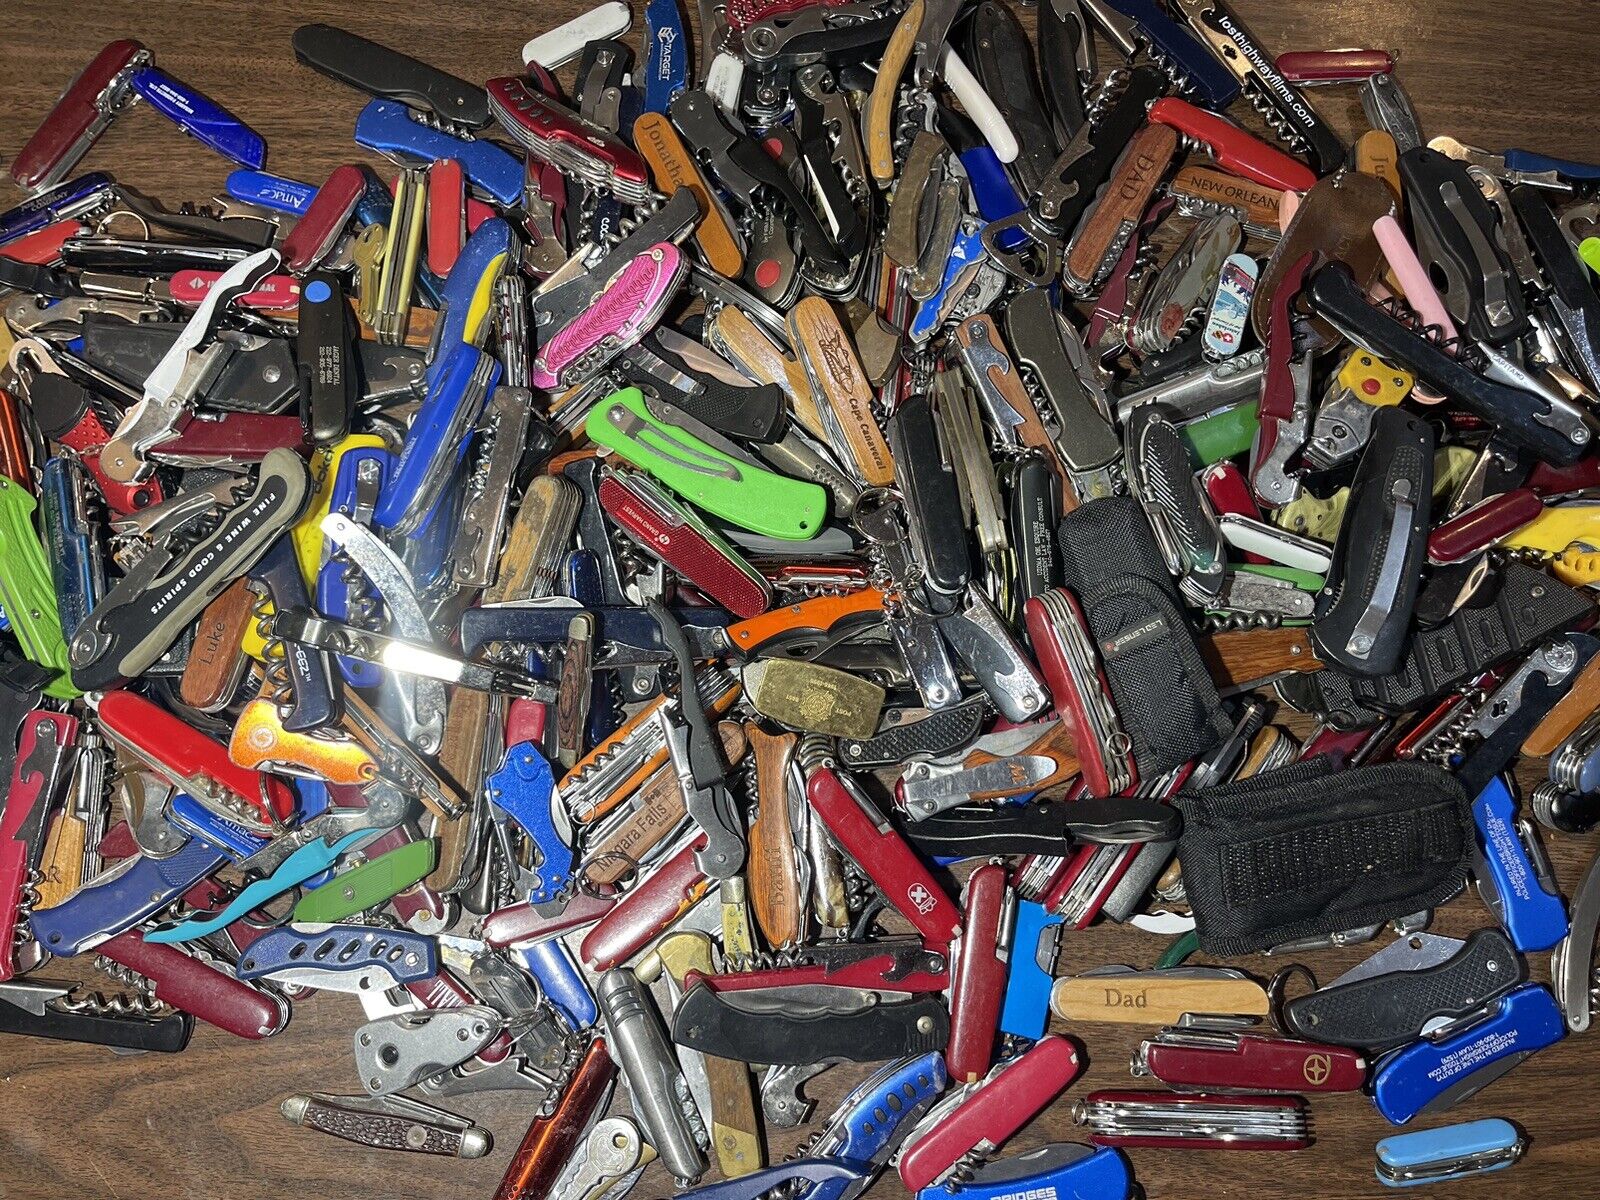 TSA Confiscated Pocket Knives/ Multitools Lot